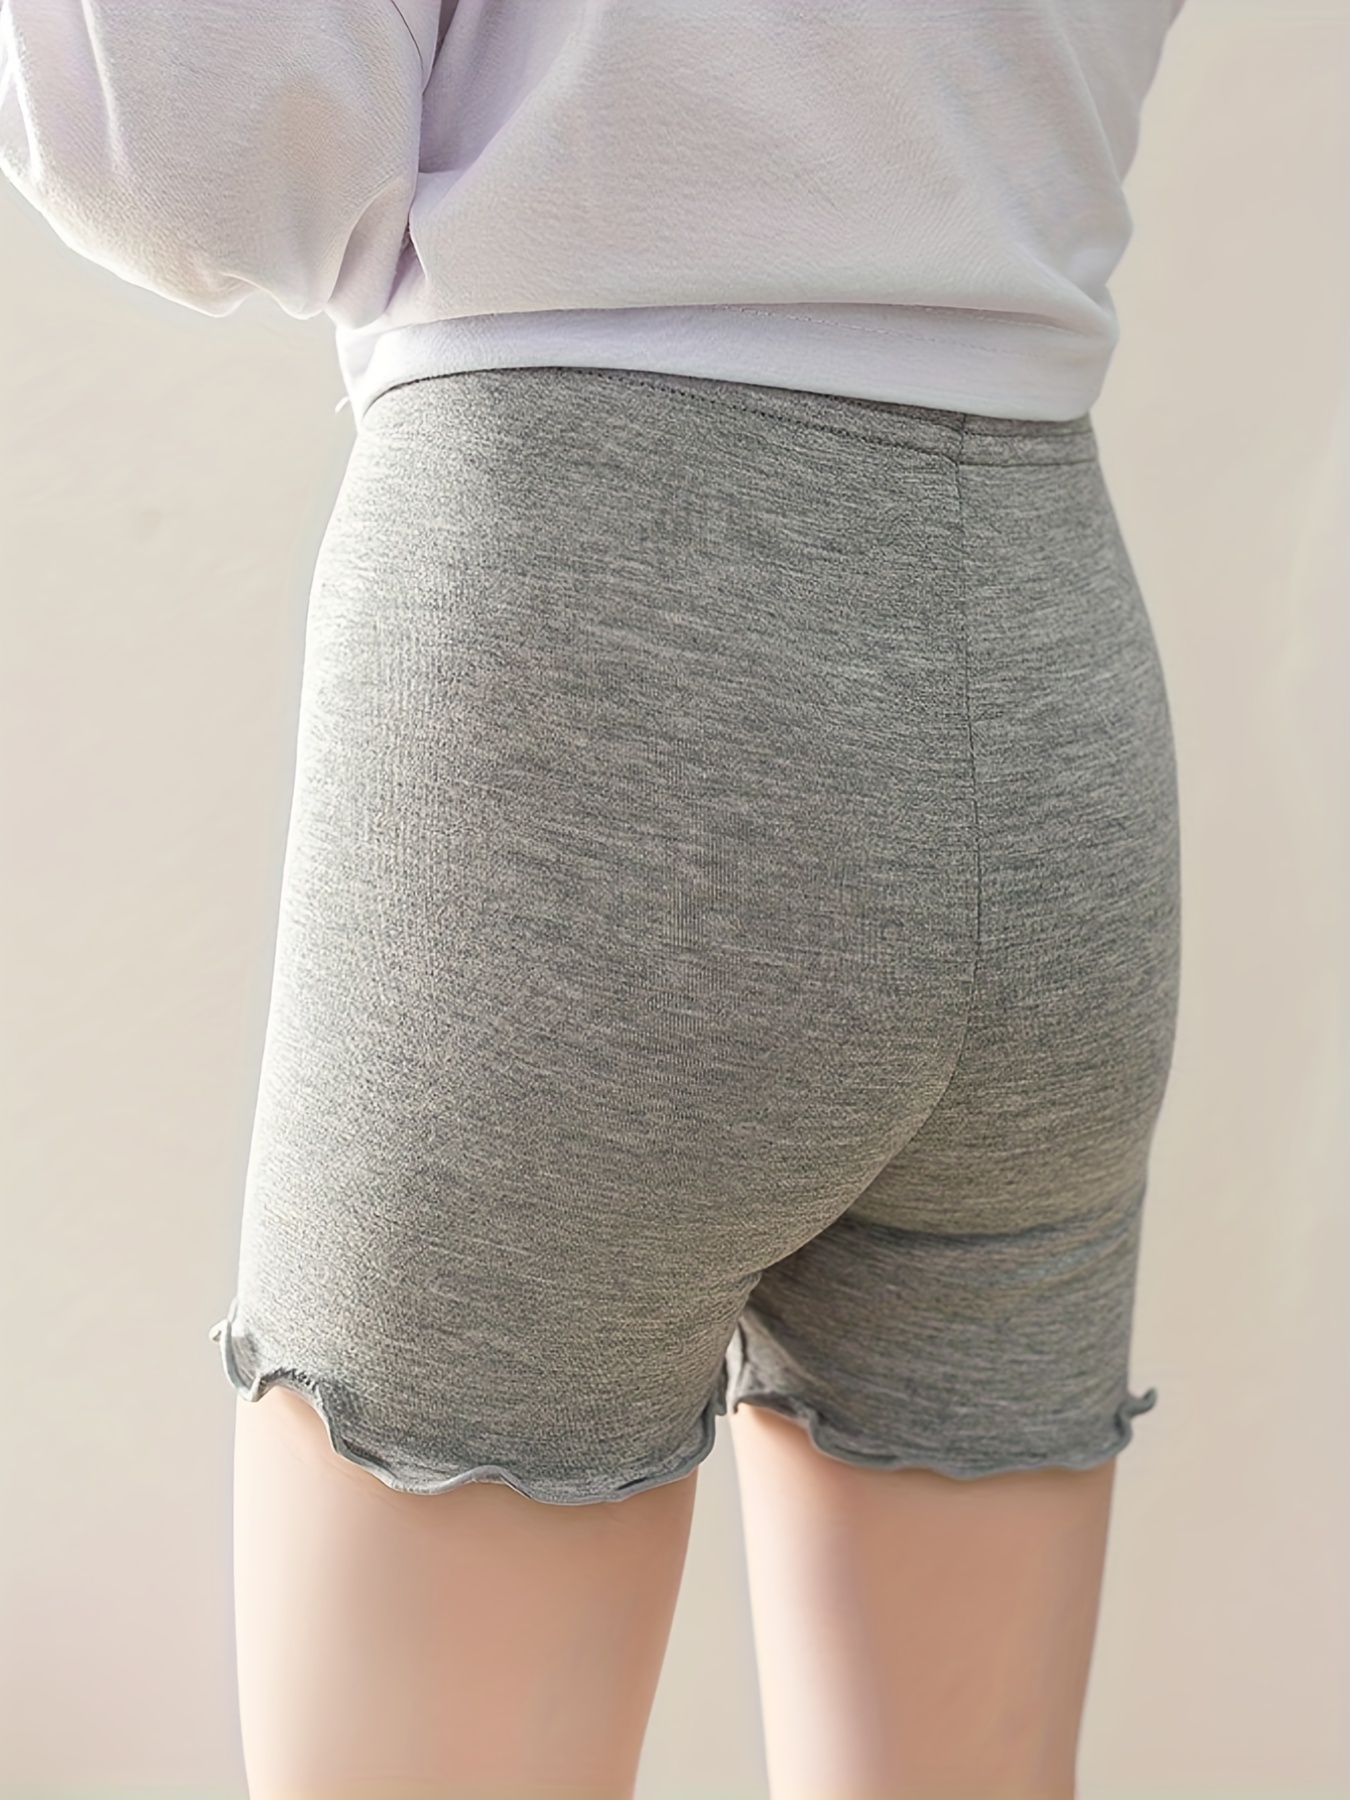 Buy Women Safety Shorts Lace Cotton Short Pants Underskirt Shorts